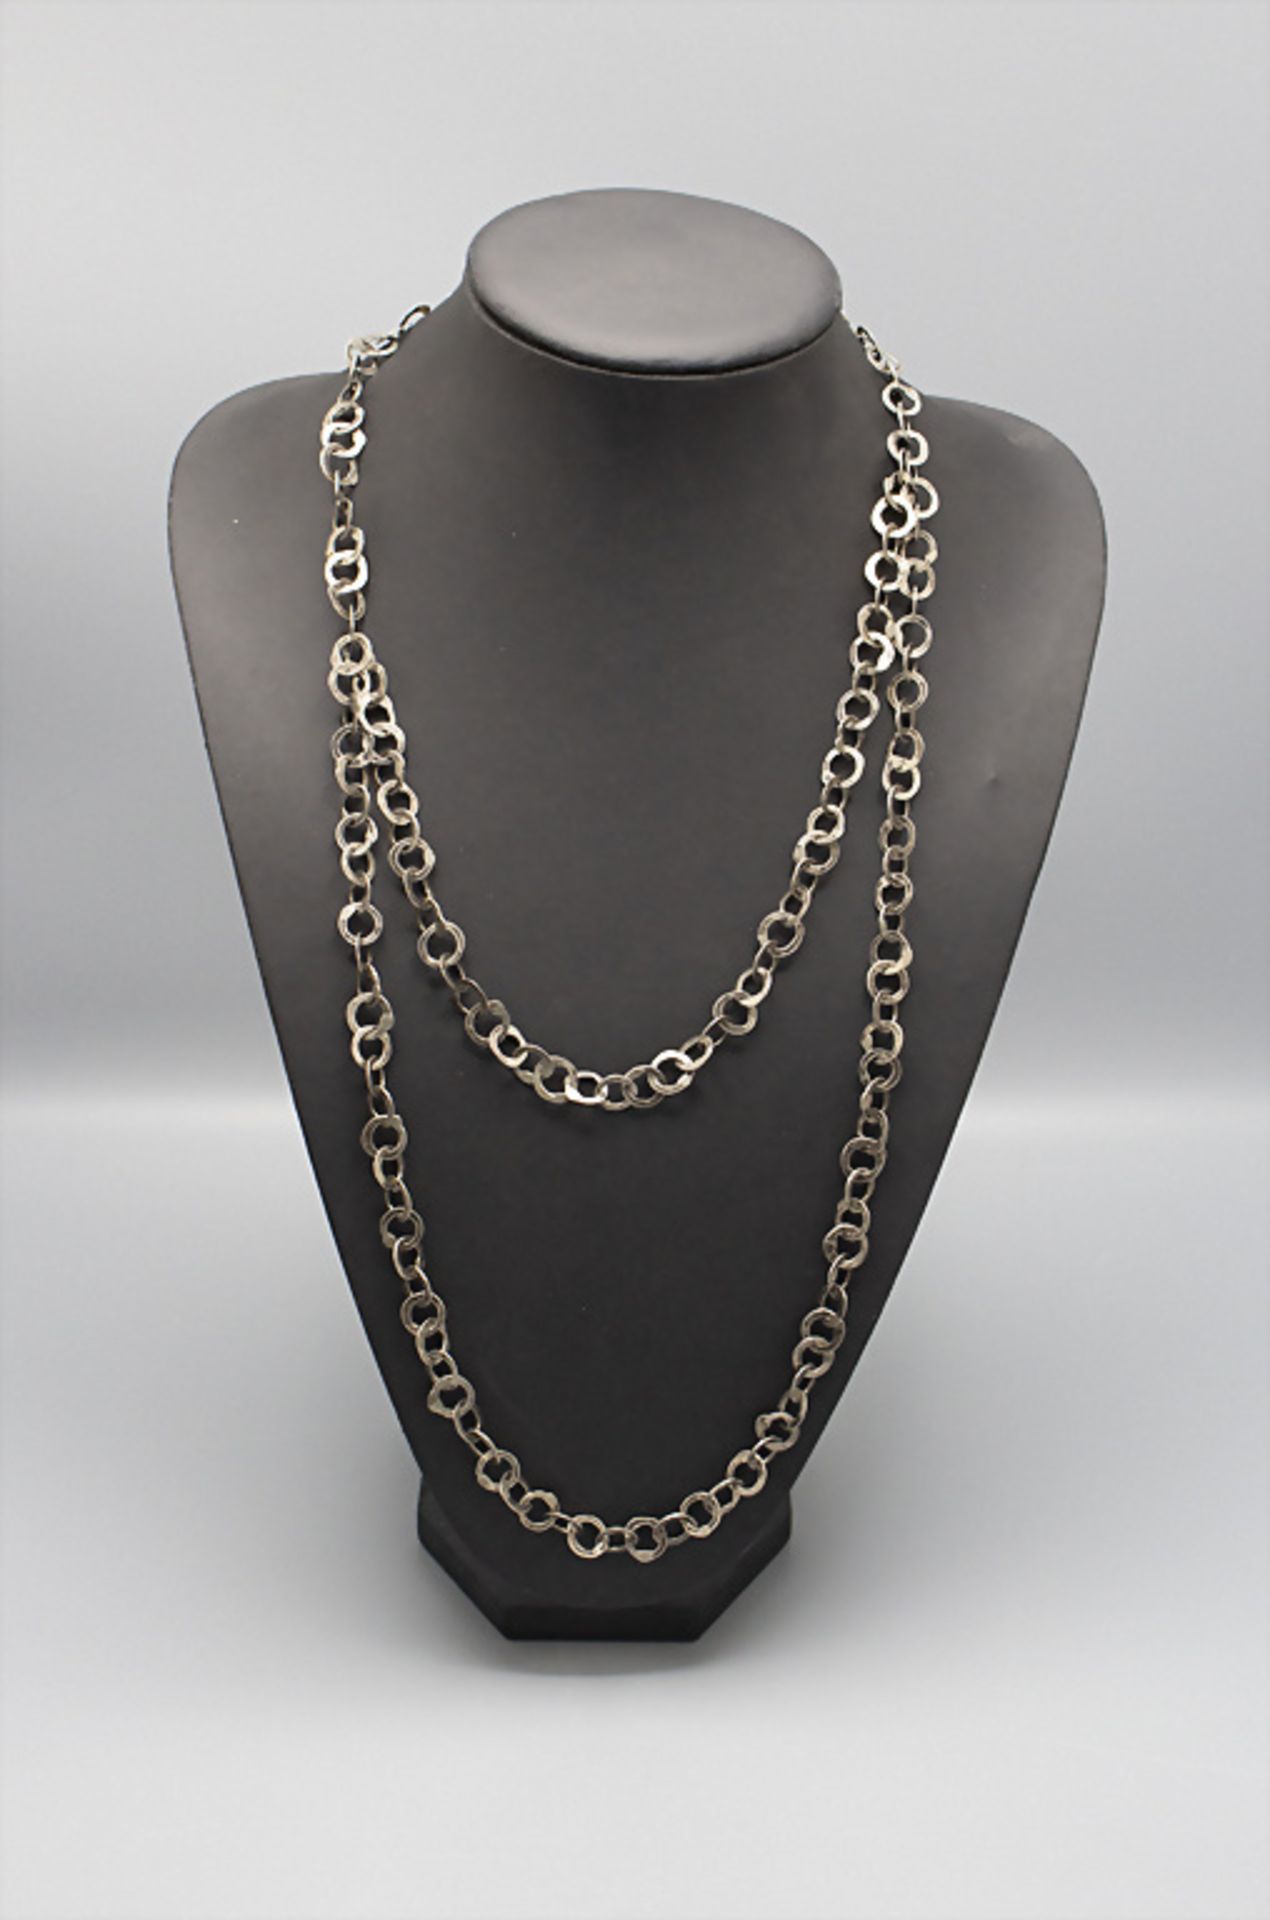 Vintage Silberkette / A vintage silver necklace, wohl 1970er Jahre